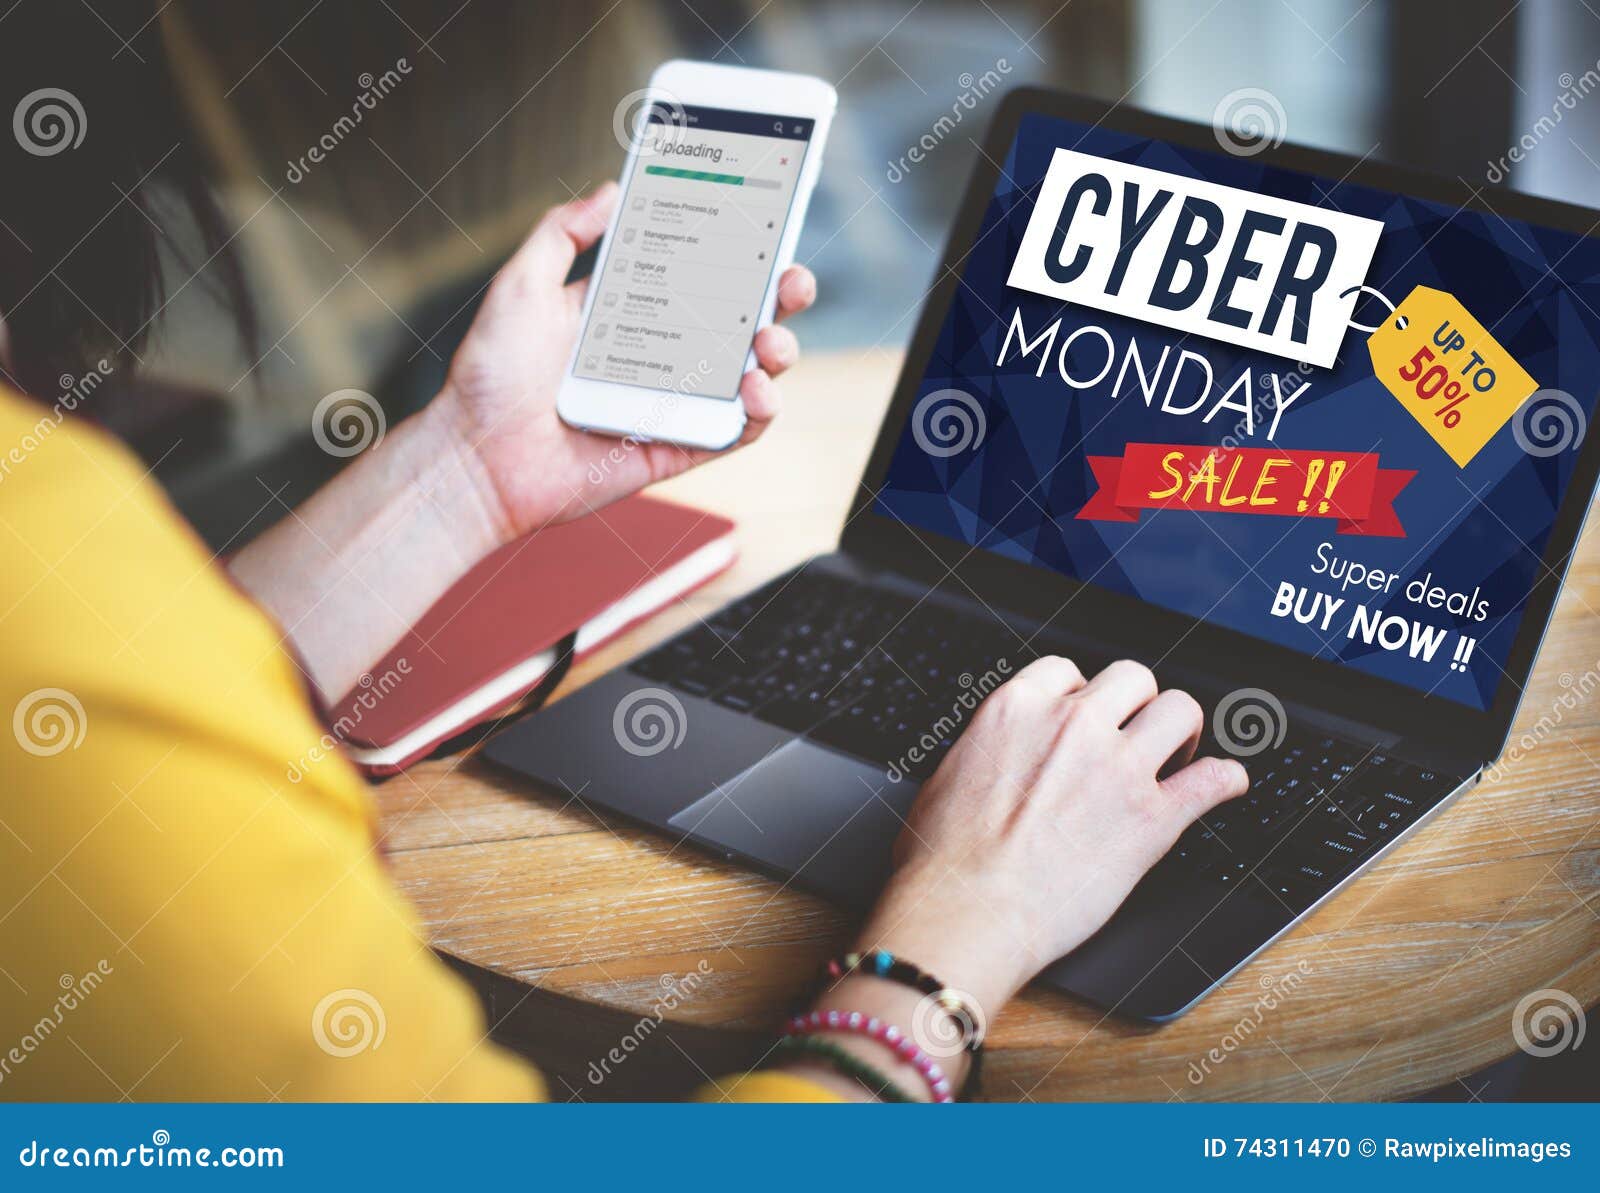 cyber monday sale discount clearance sale concept